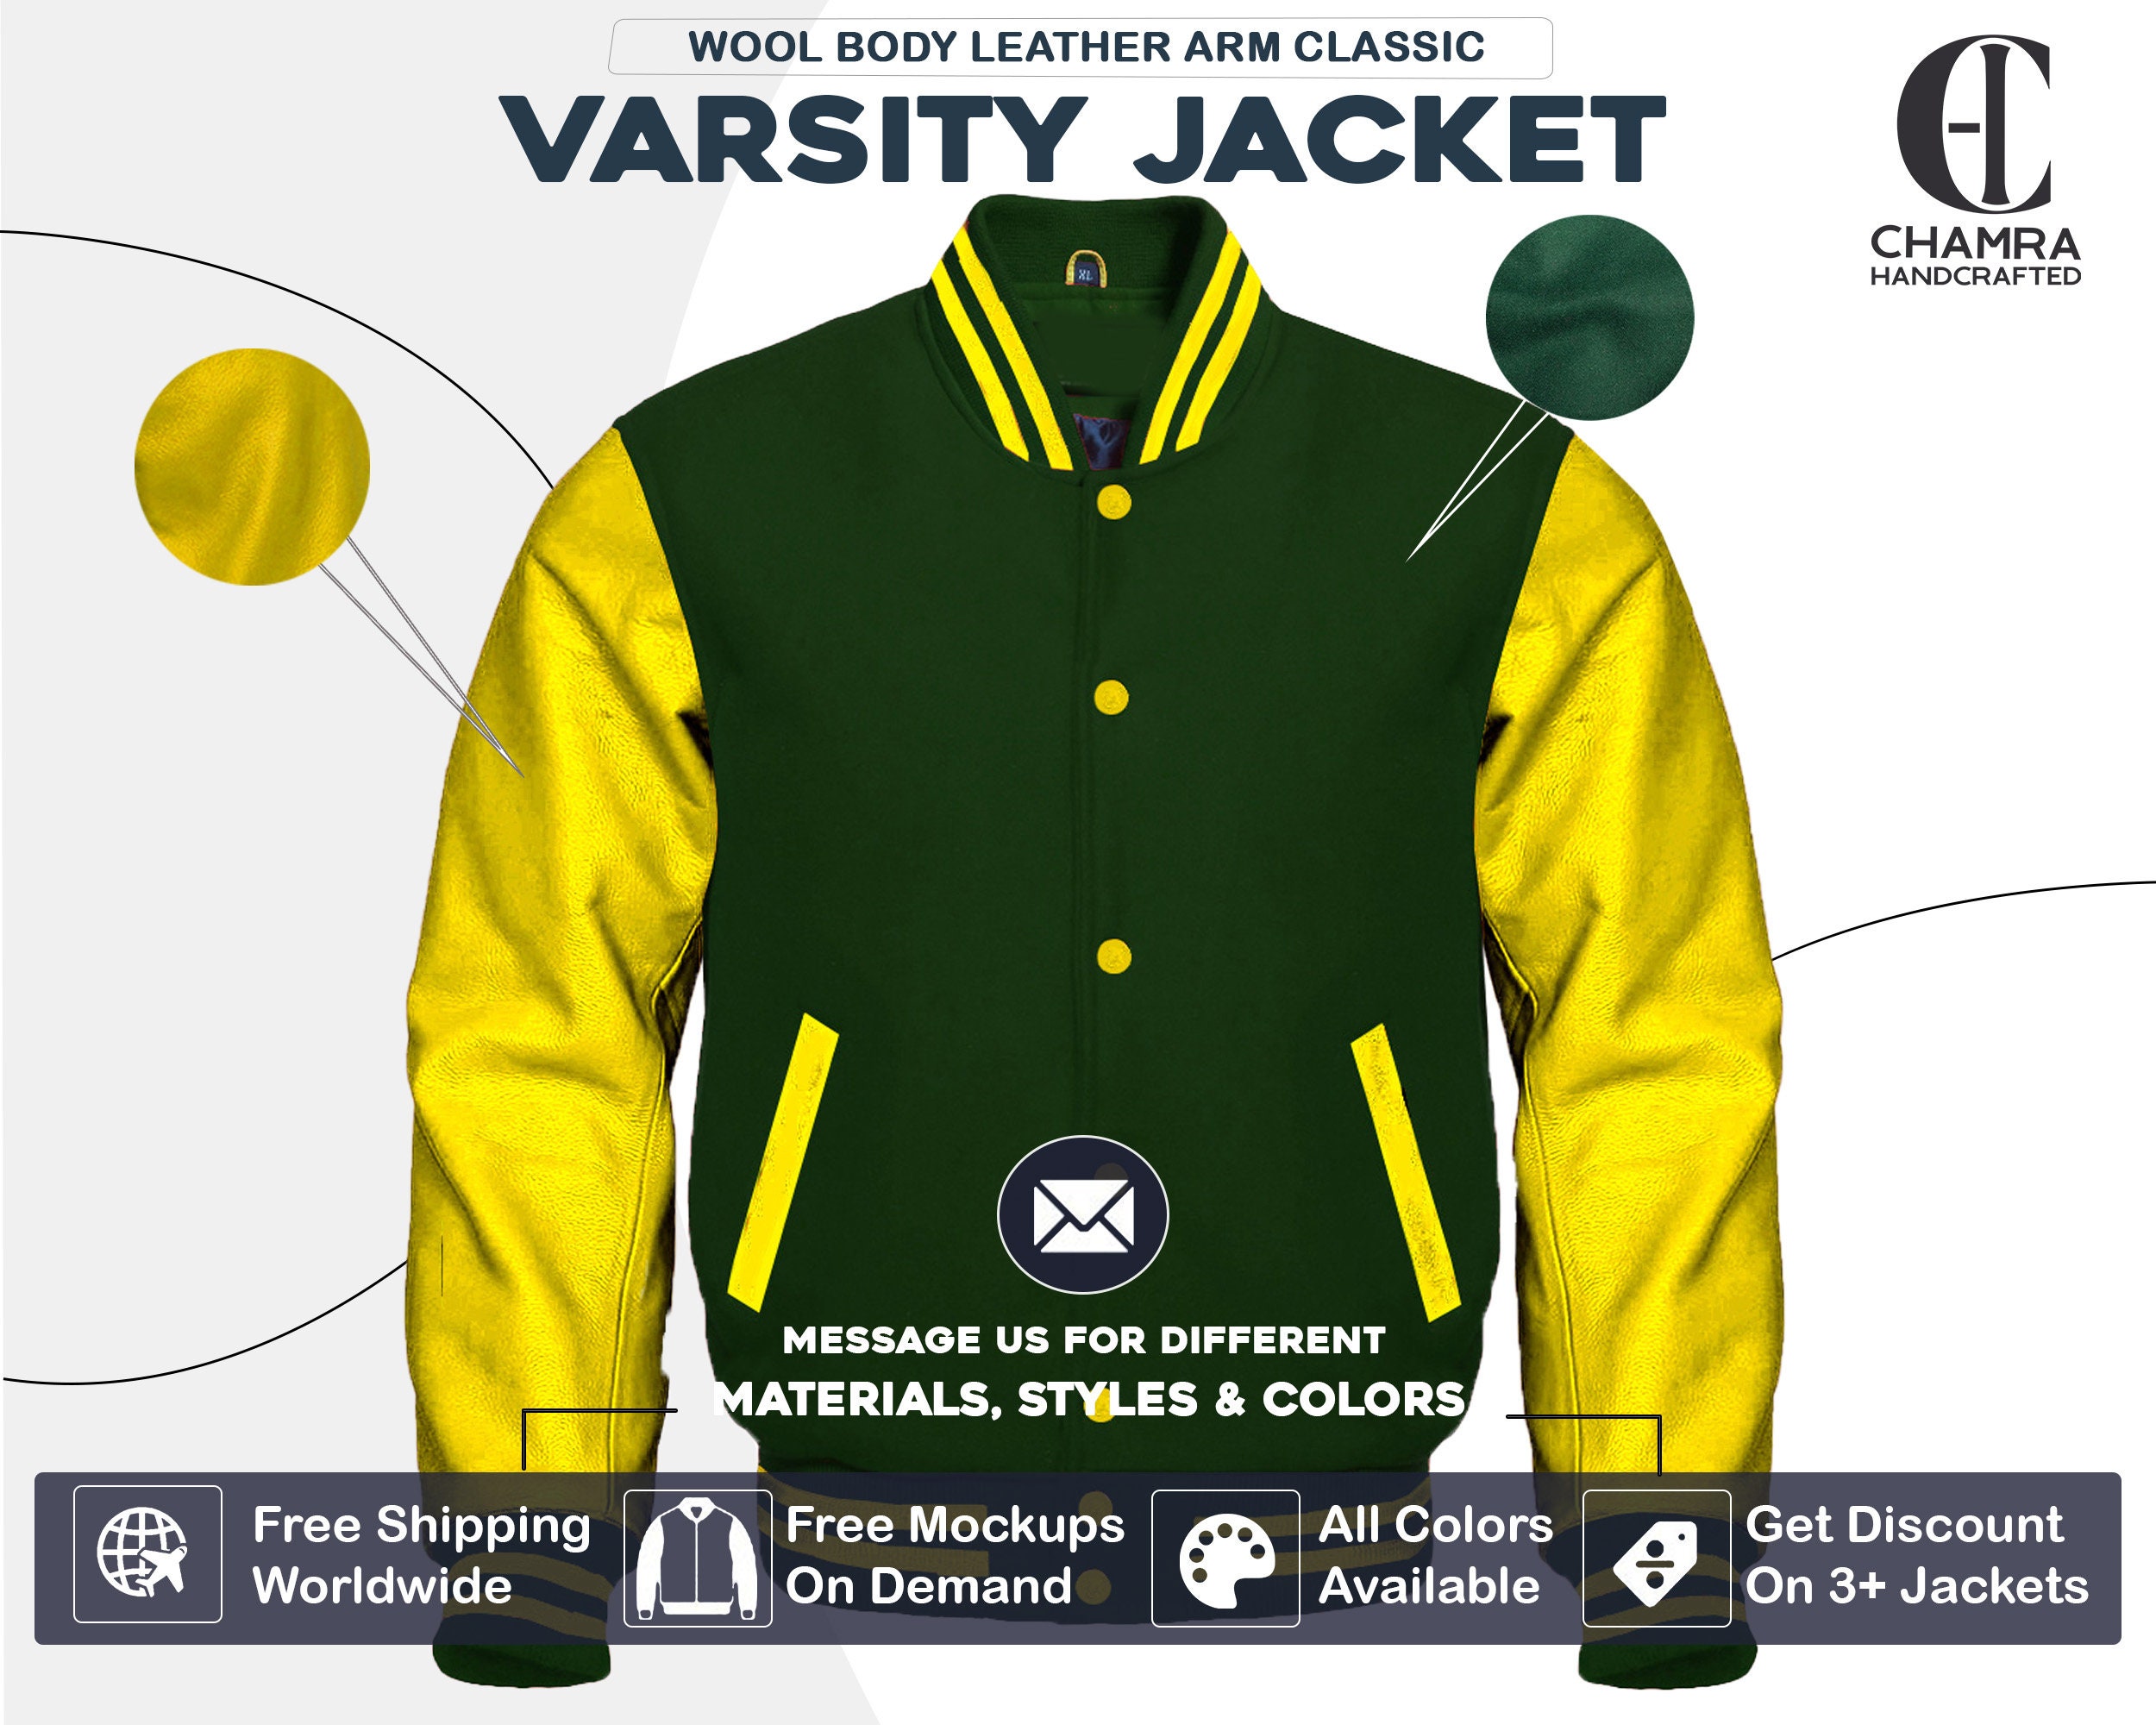 Vintage N Black And Yellow Letterman Varsity Jacket Size XL USA